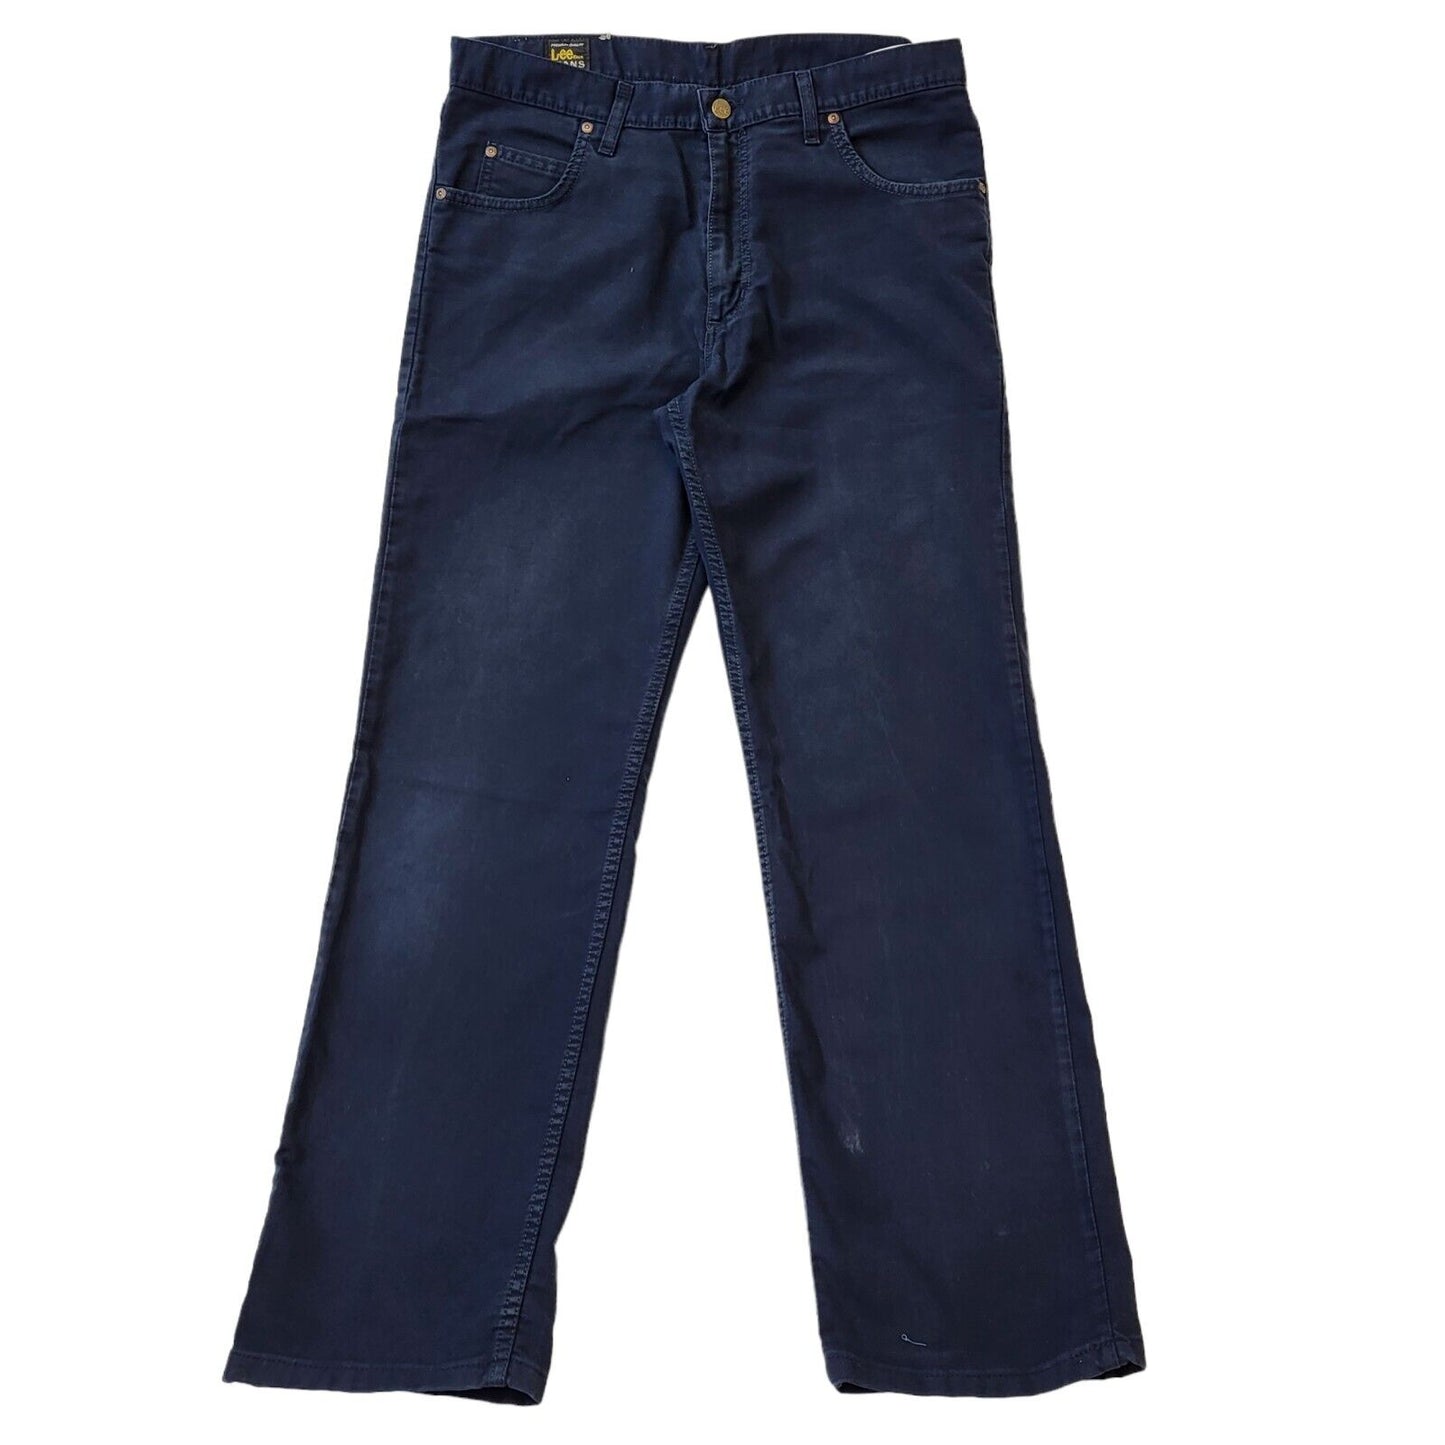 Lee Jeans (XL)